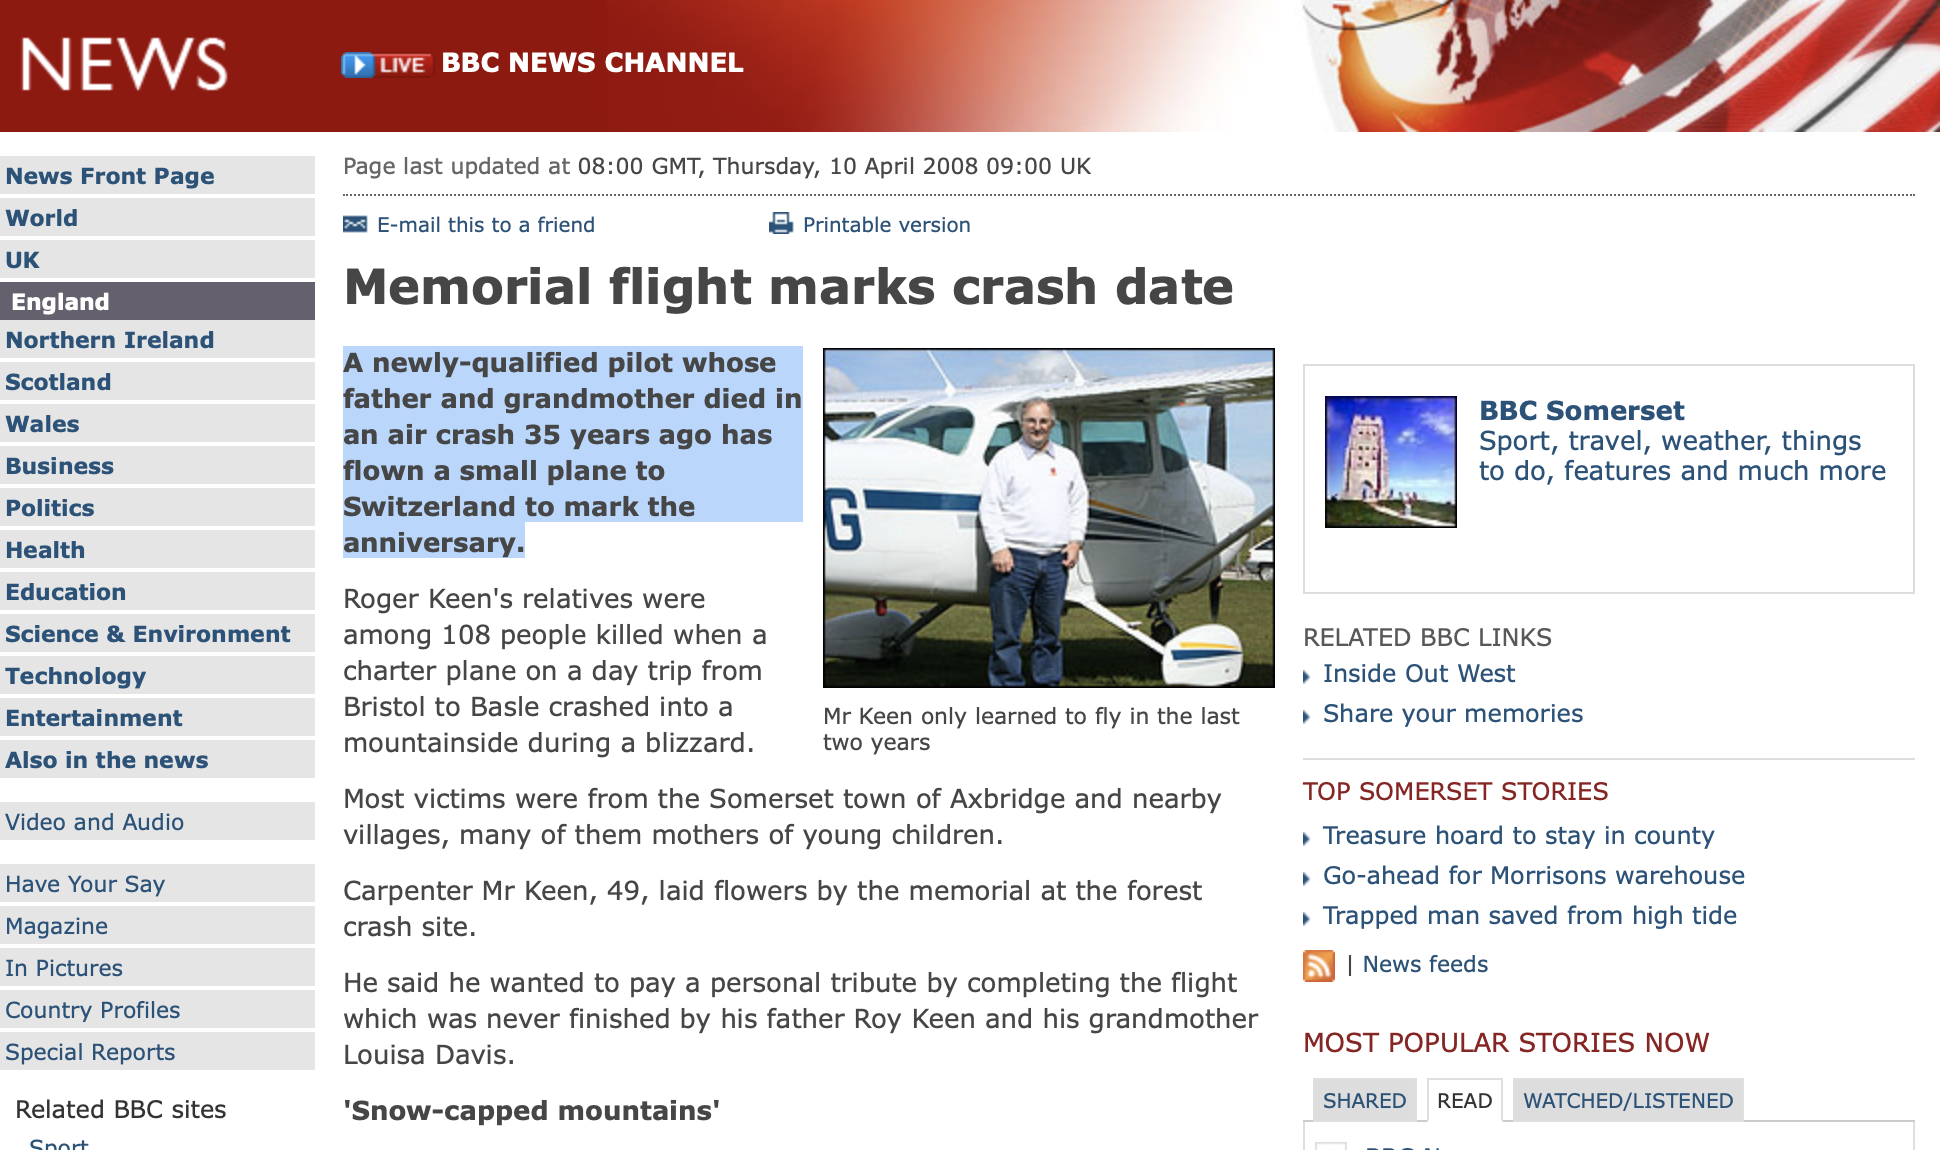 BBC reports on 2008 Memorial flight to mark crash date